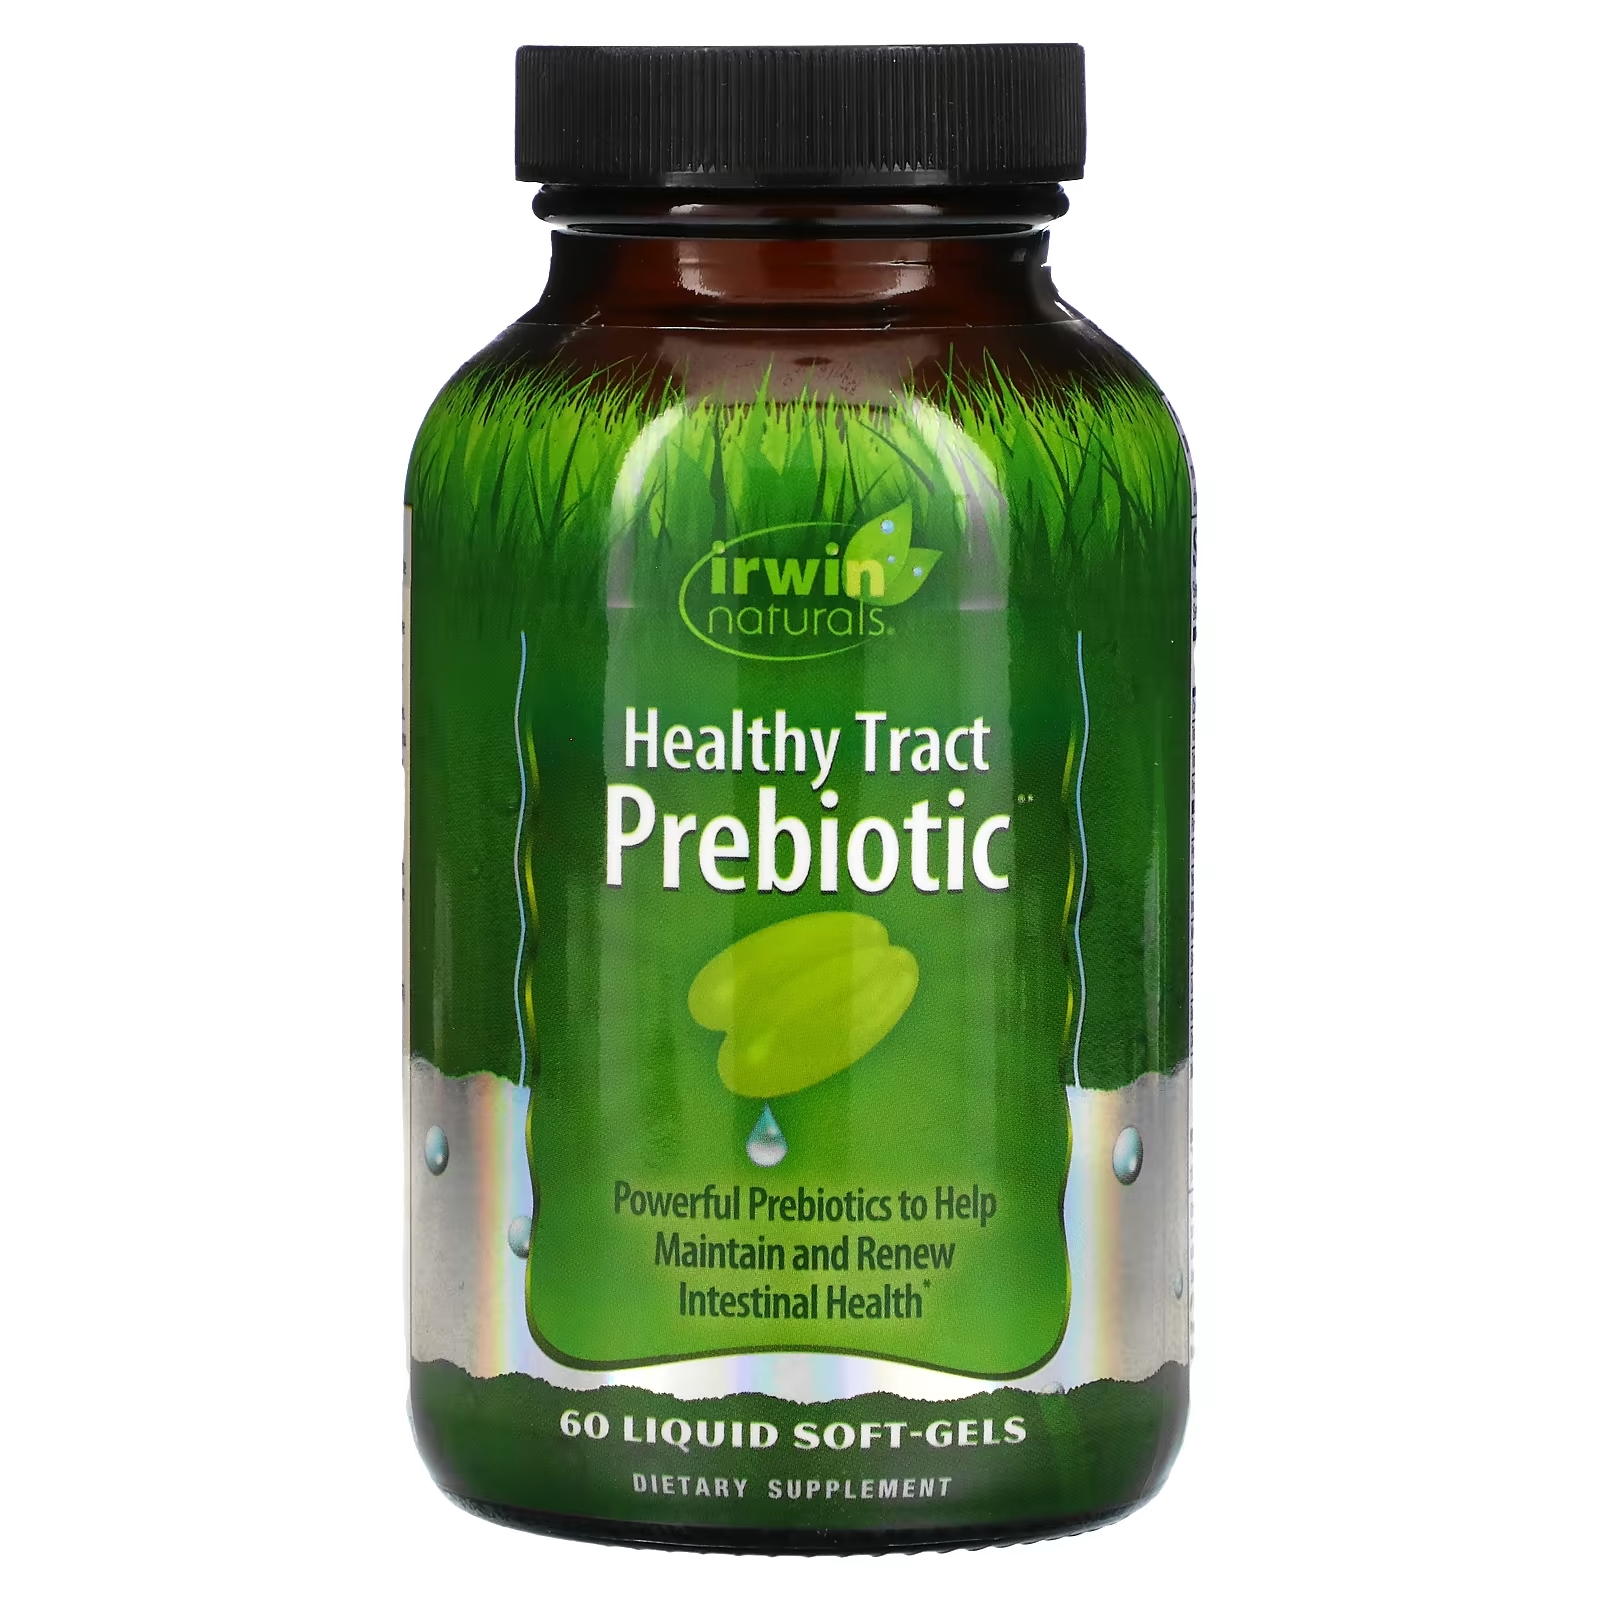 Irwin Naturals Healthy Tract Prebiotic пребиотик для здоровья кишечника, 60 капсул